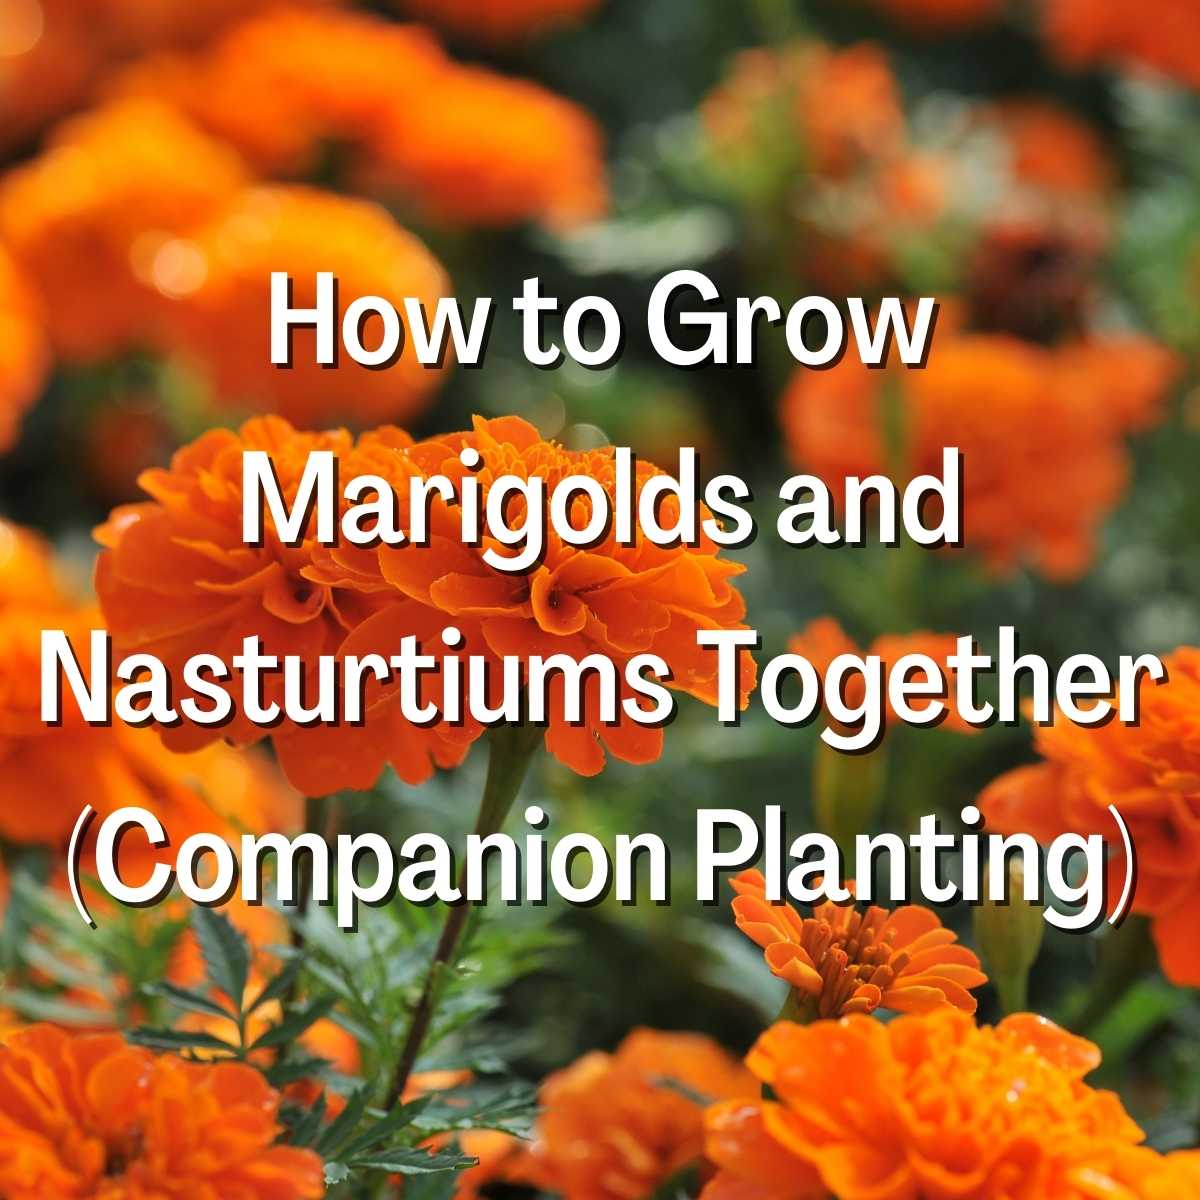 How to Grow Marigolds and Nasturtiums Together